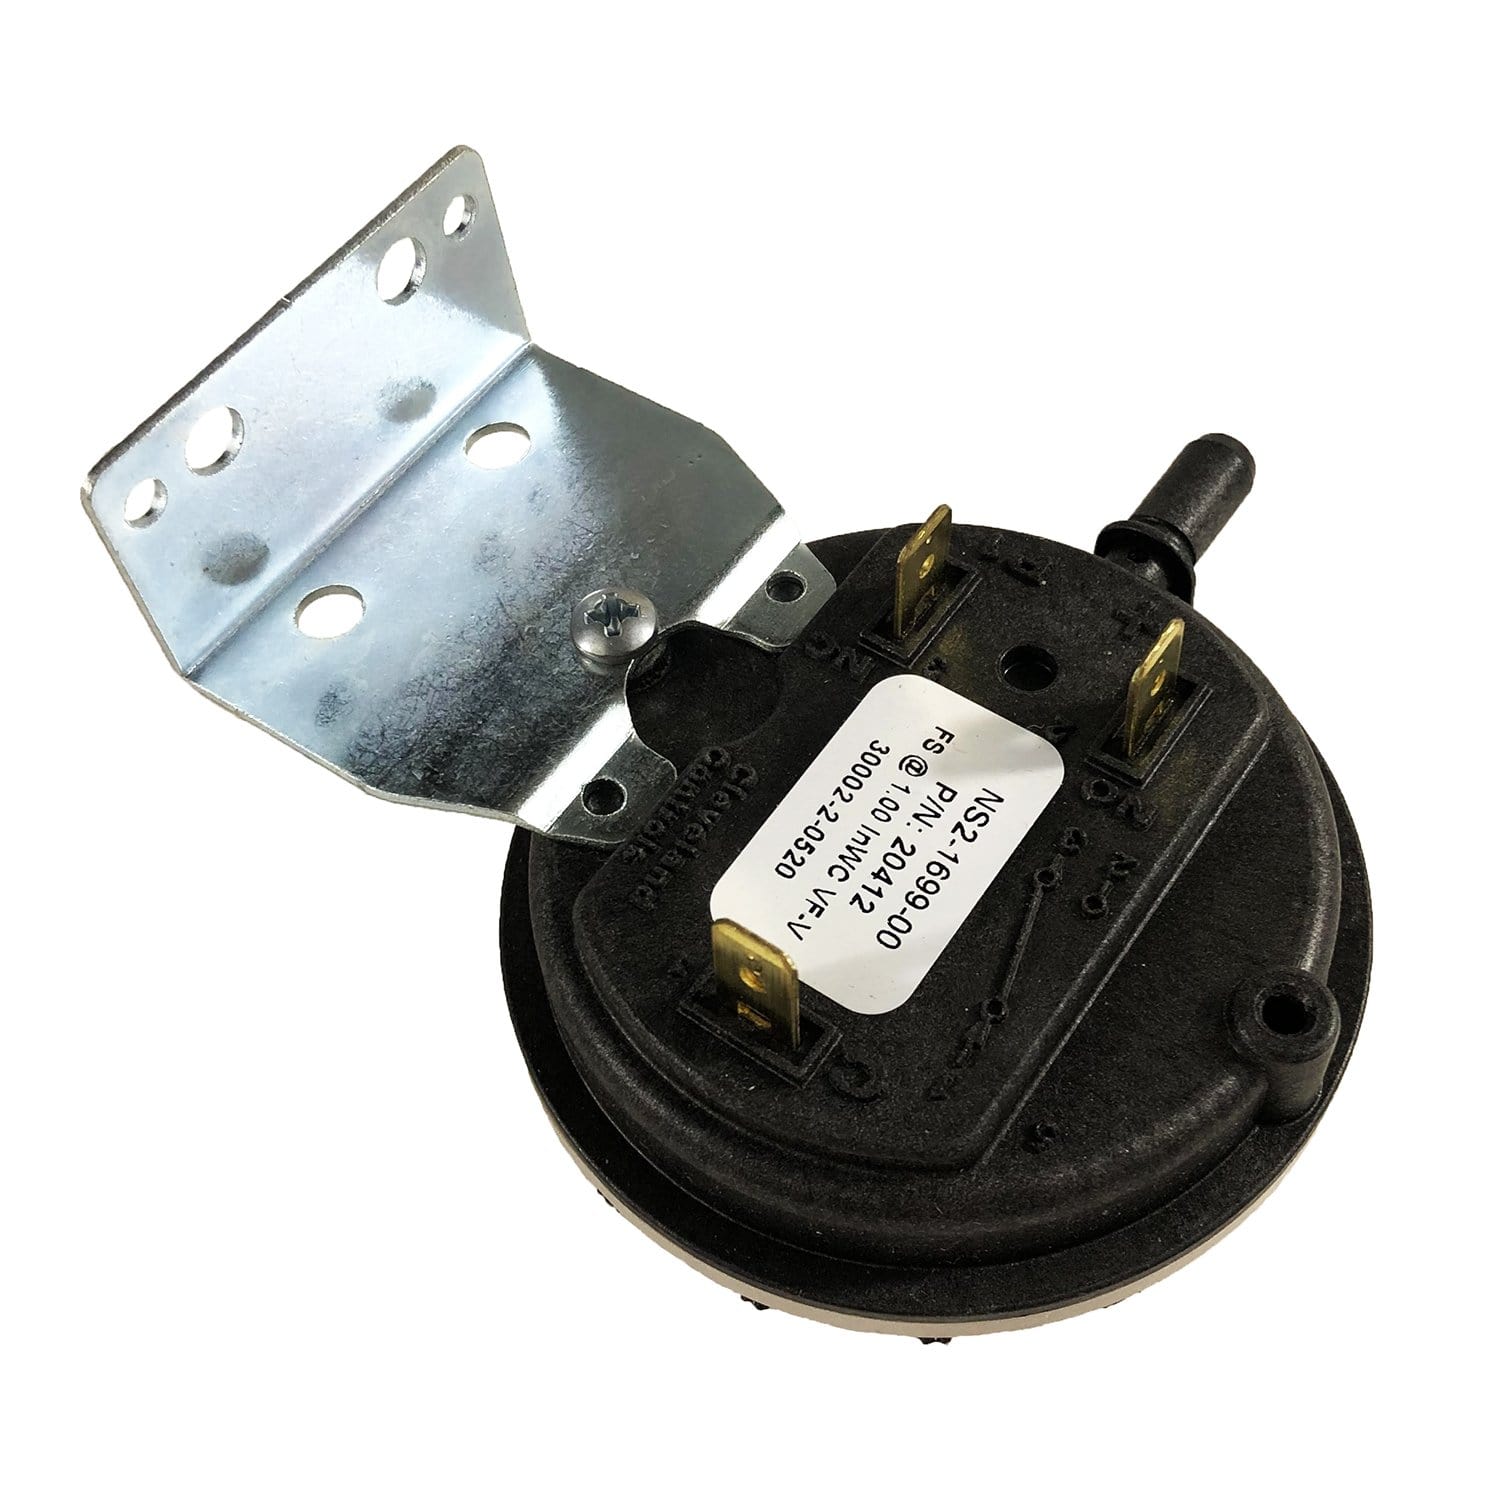 NBK 20412 Vacuum Switch, Replaces OEM WEIL MCLAIN 511-624-510